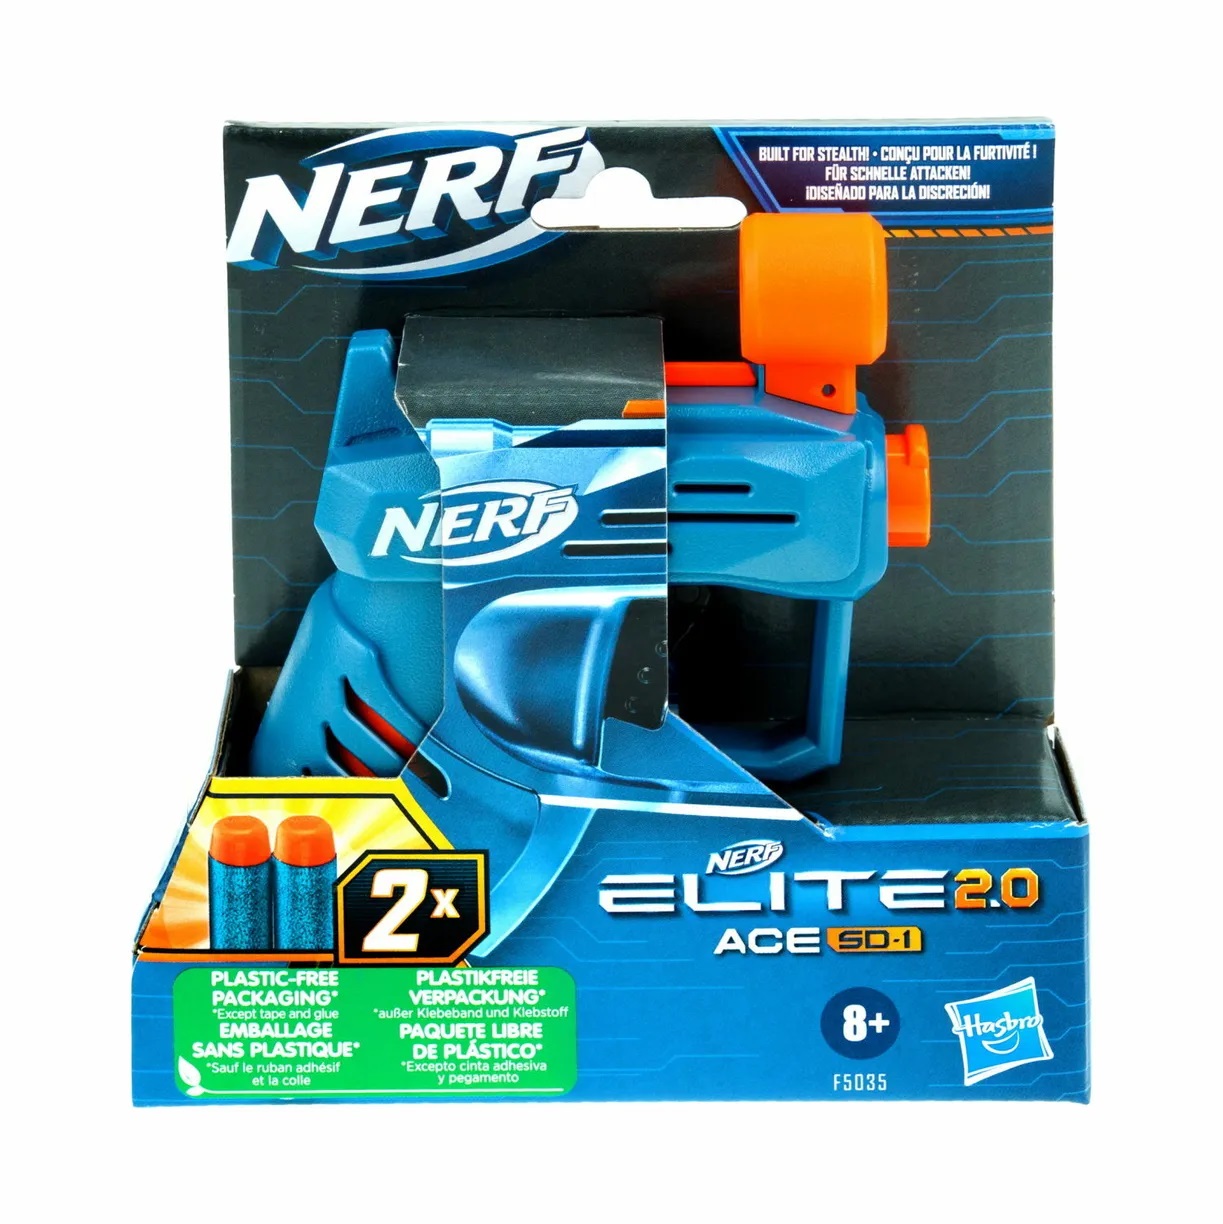 Бластер Nerf Elite 2.0 F5035 Ace SD-1 F5035